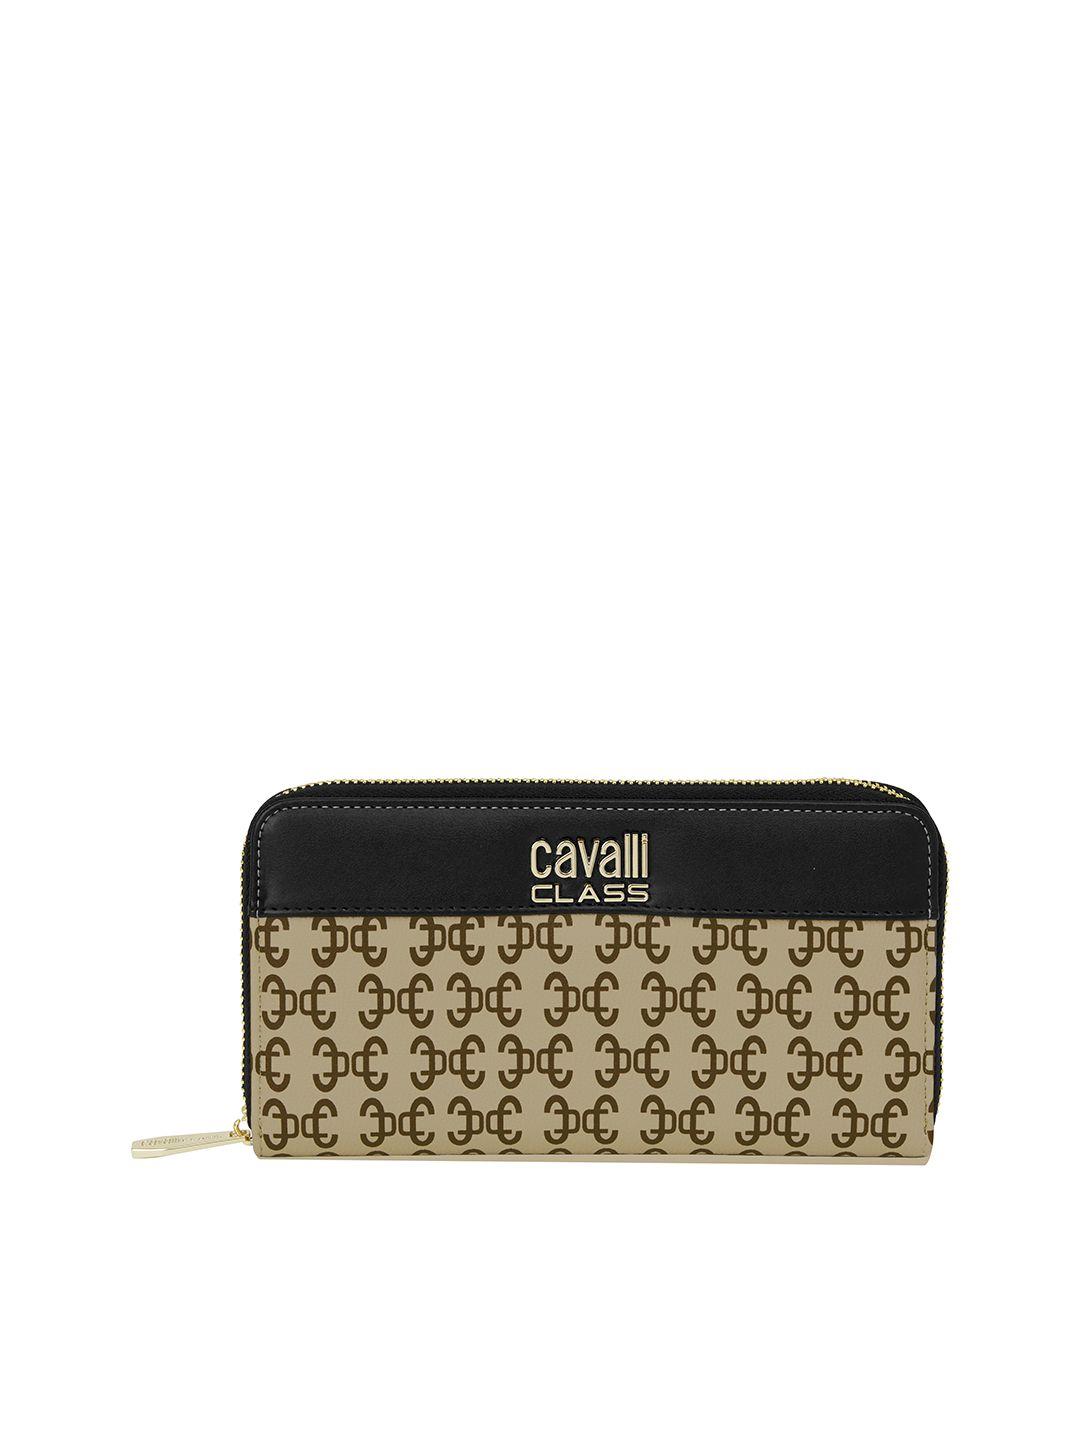 cavalli class women abstract printed zip around wallet